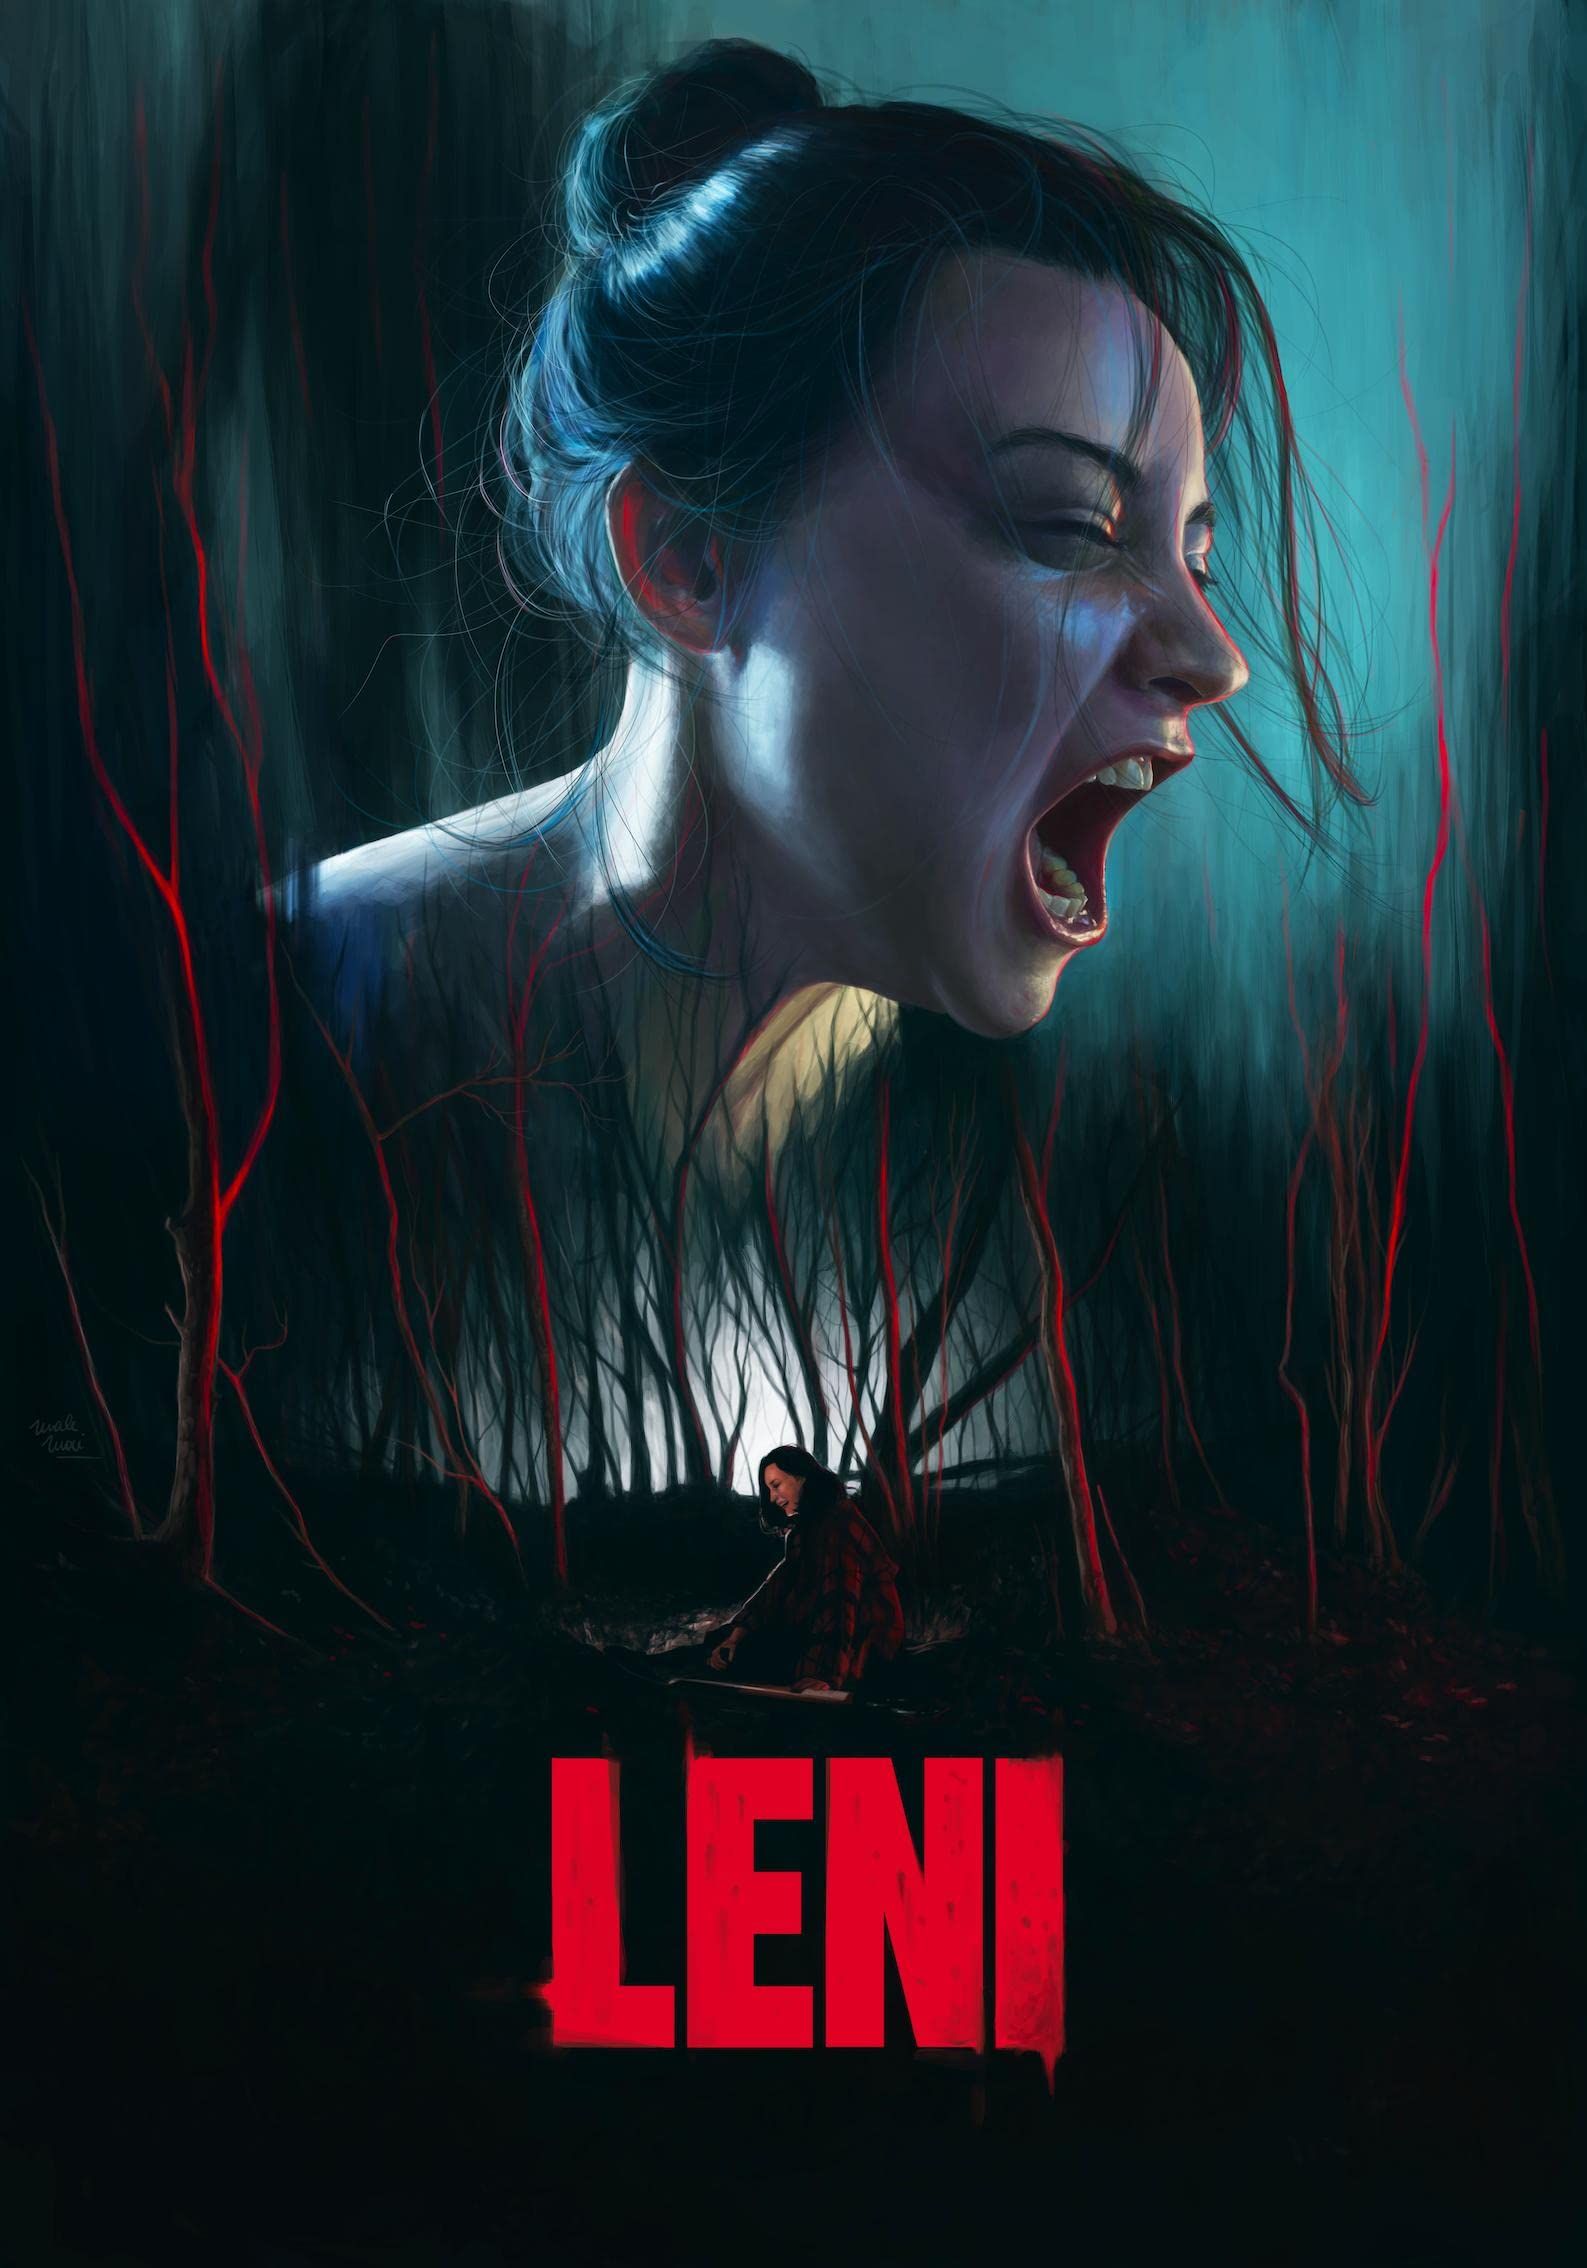 Leni (2020) Hindi Dubbed HDRip download full movie